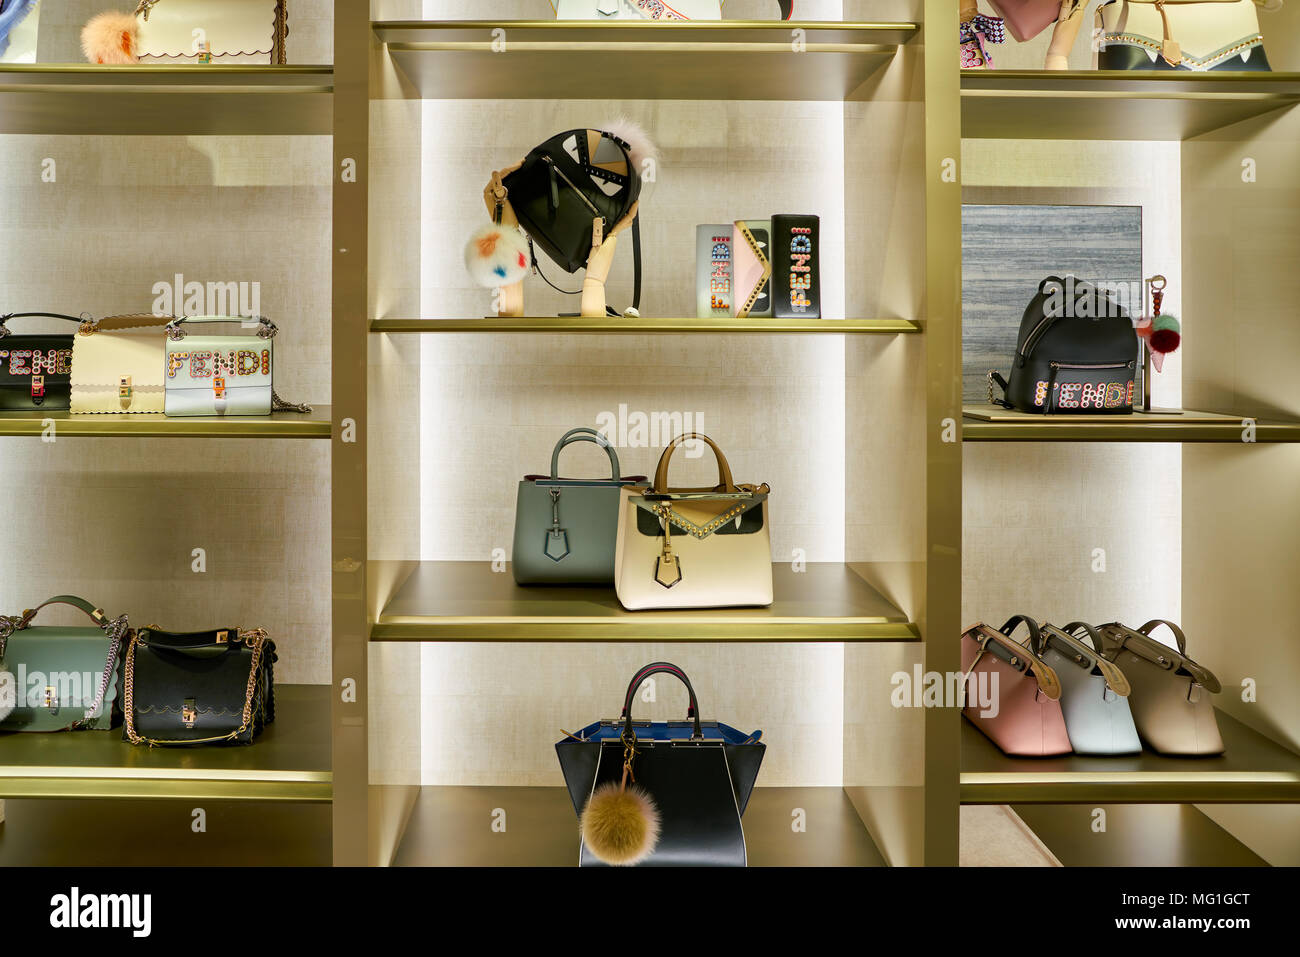 Fendi bags at the Rinascente fashion store in Rome Stock Photo - Alamy